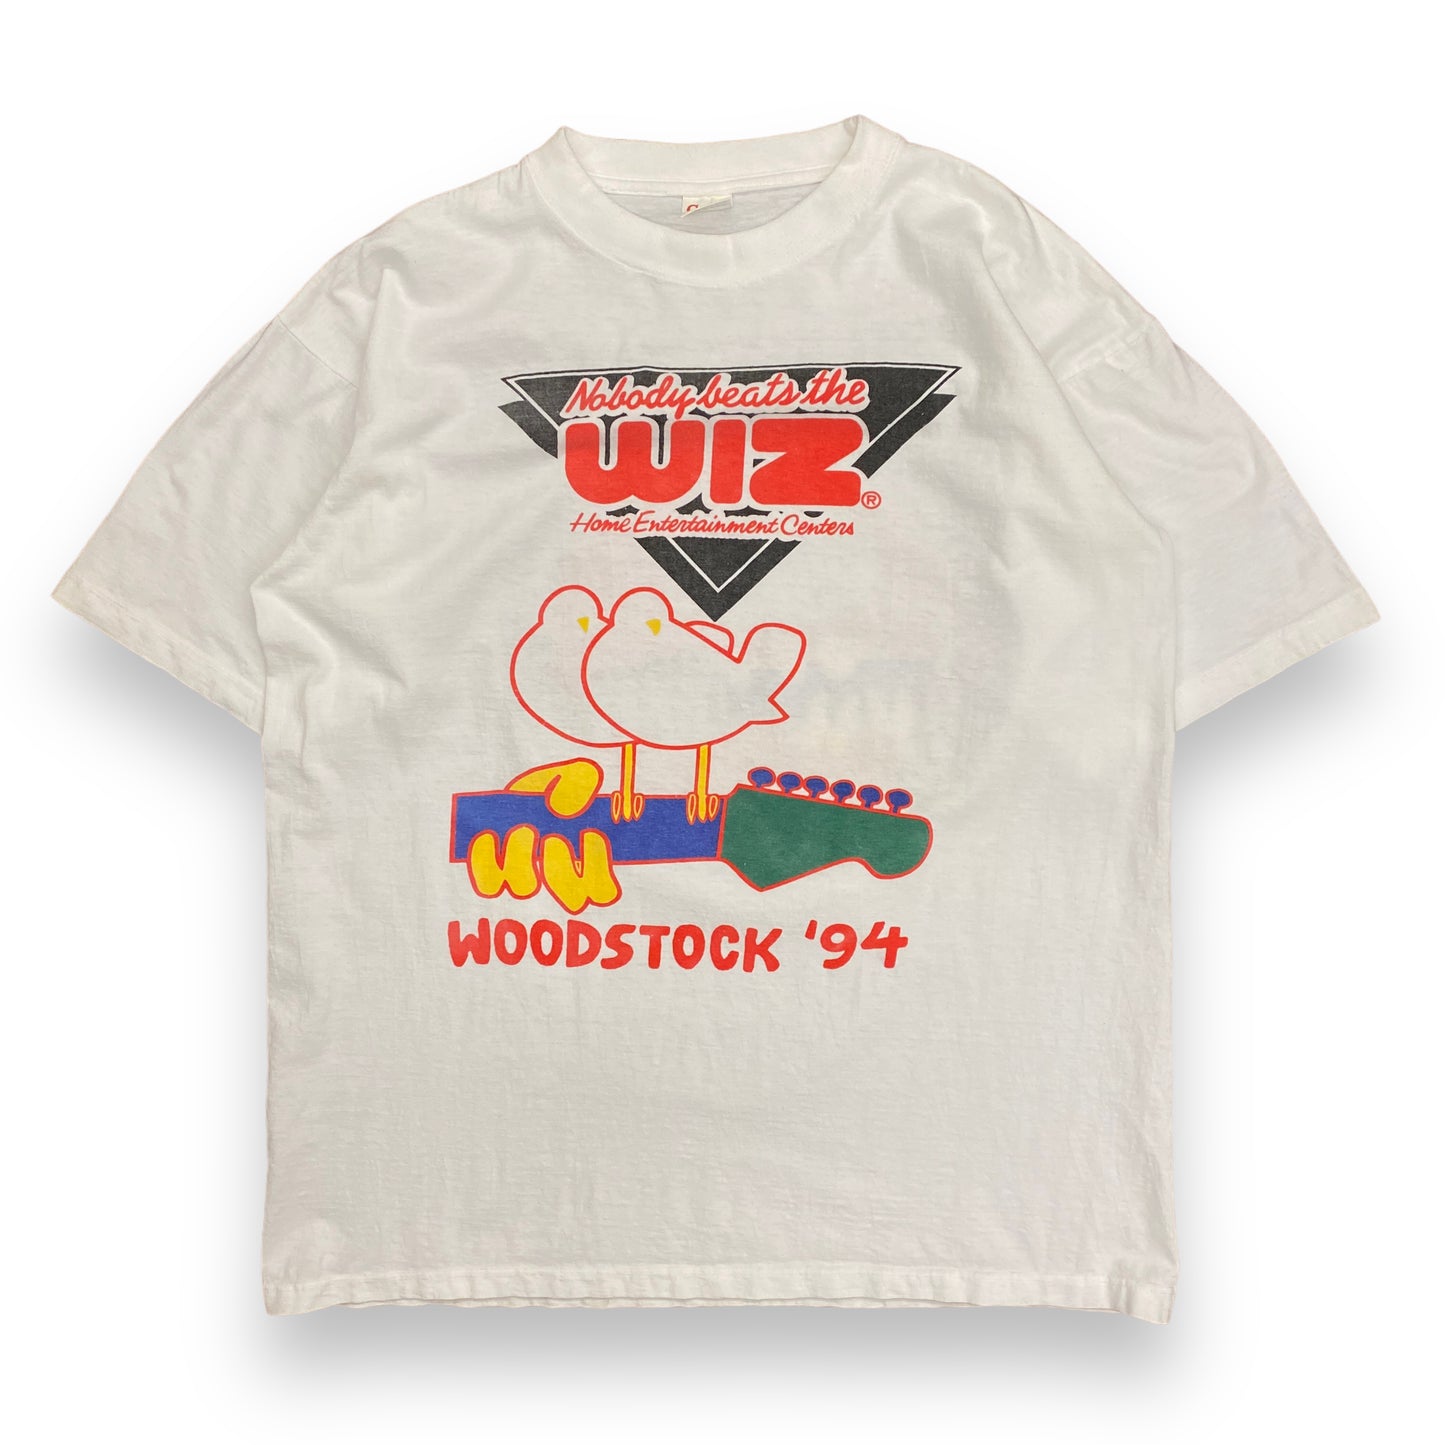 Vintage Woodstock '94 Official Sponsor Tee - Size Large